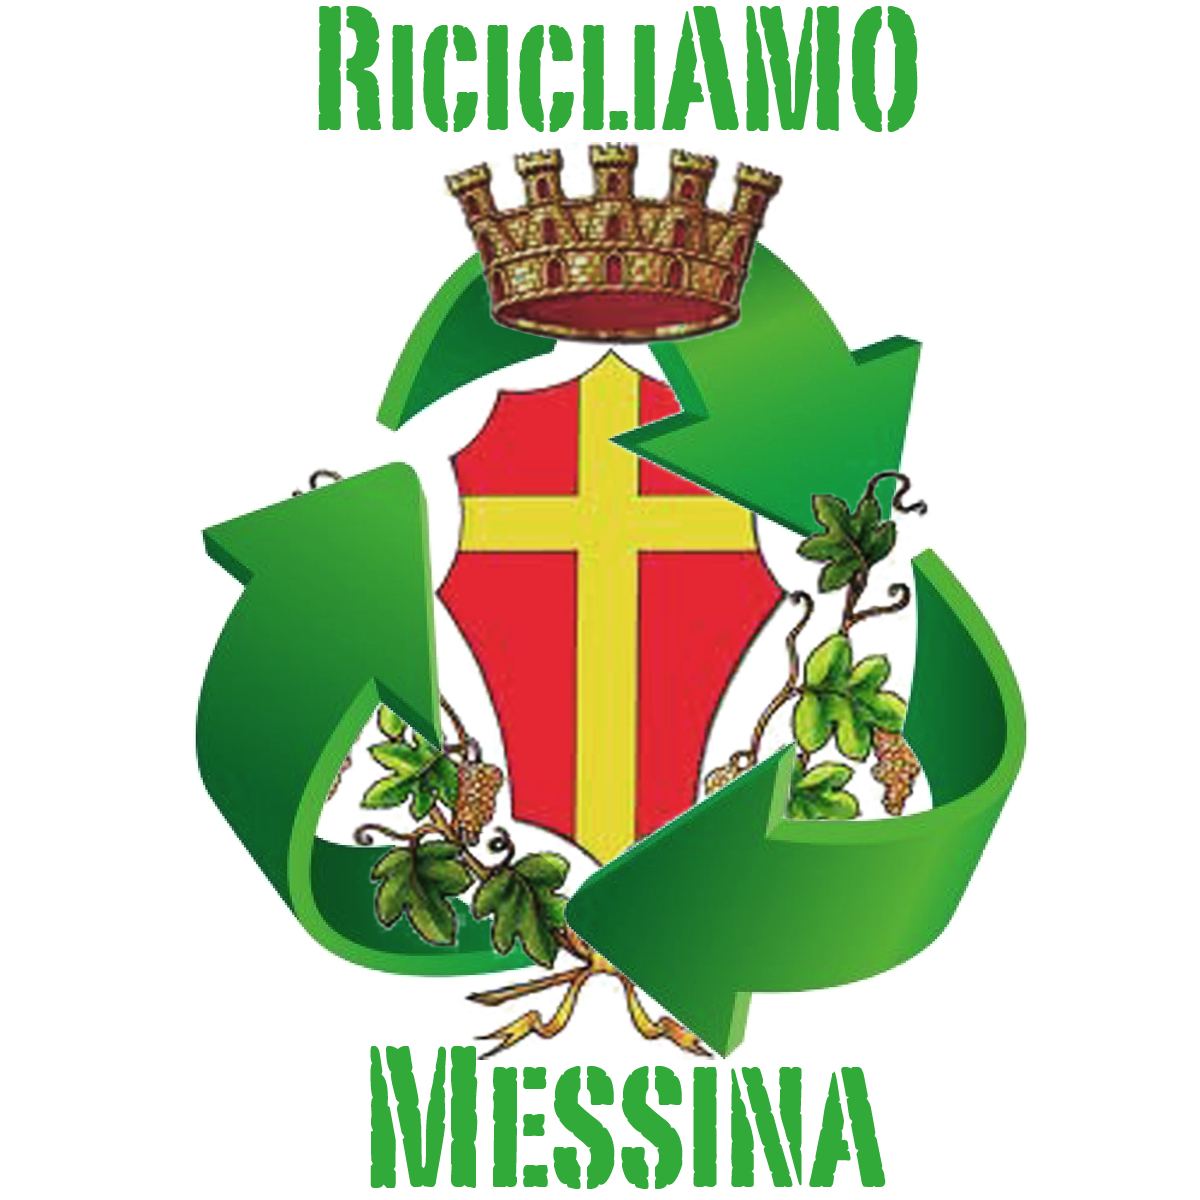 RicicliAMO Messina